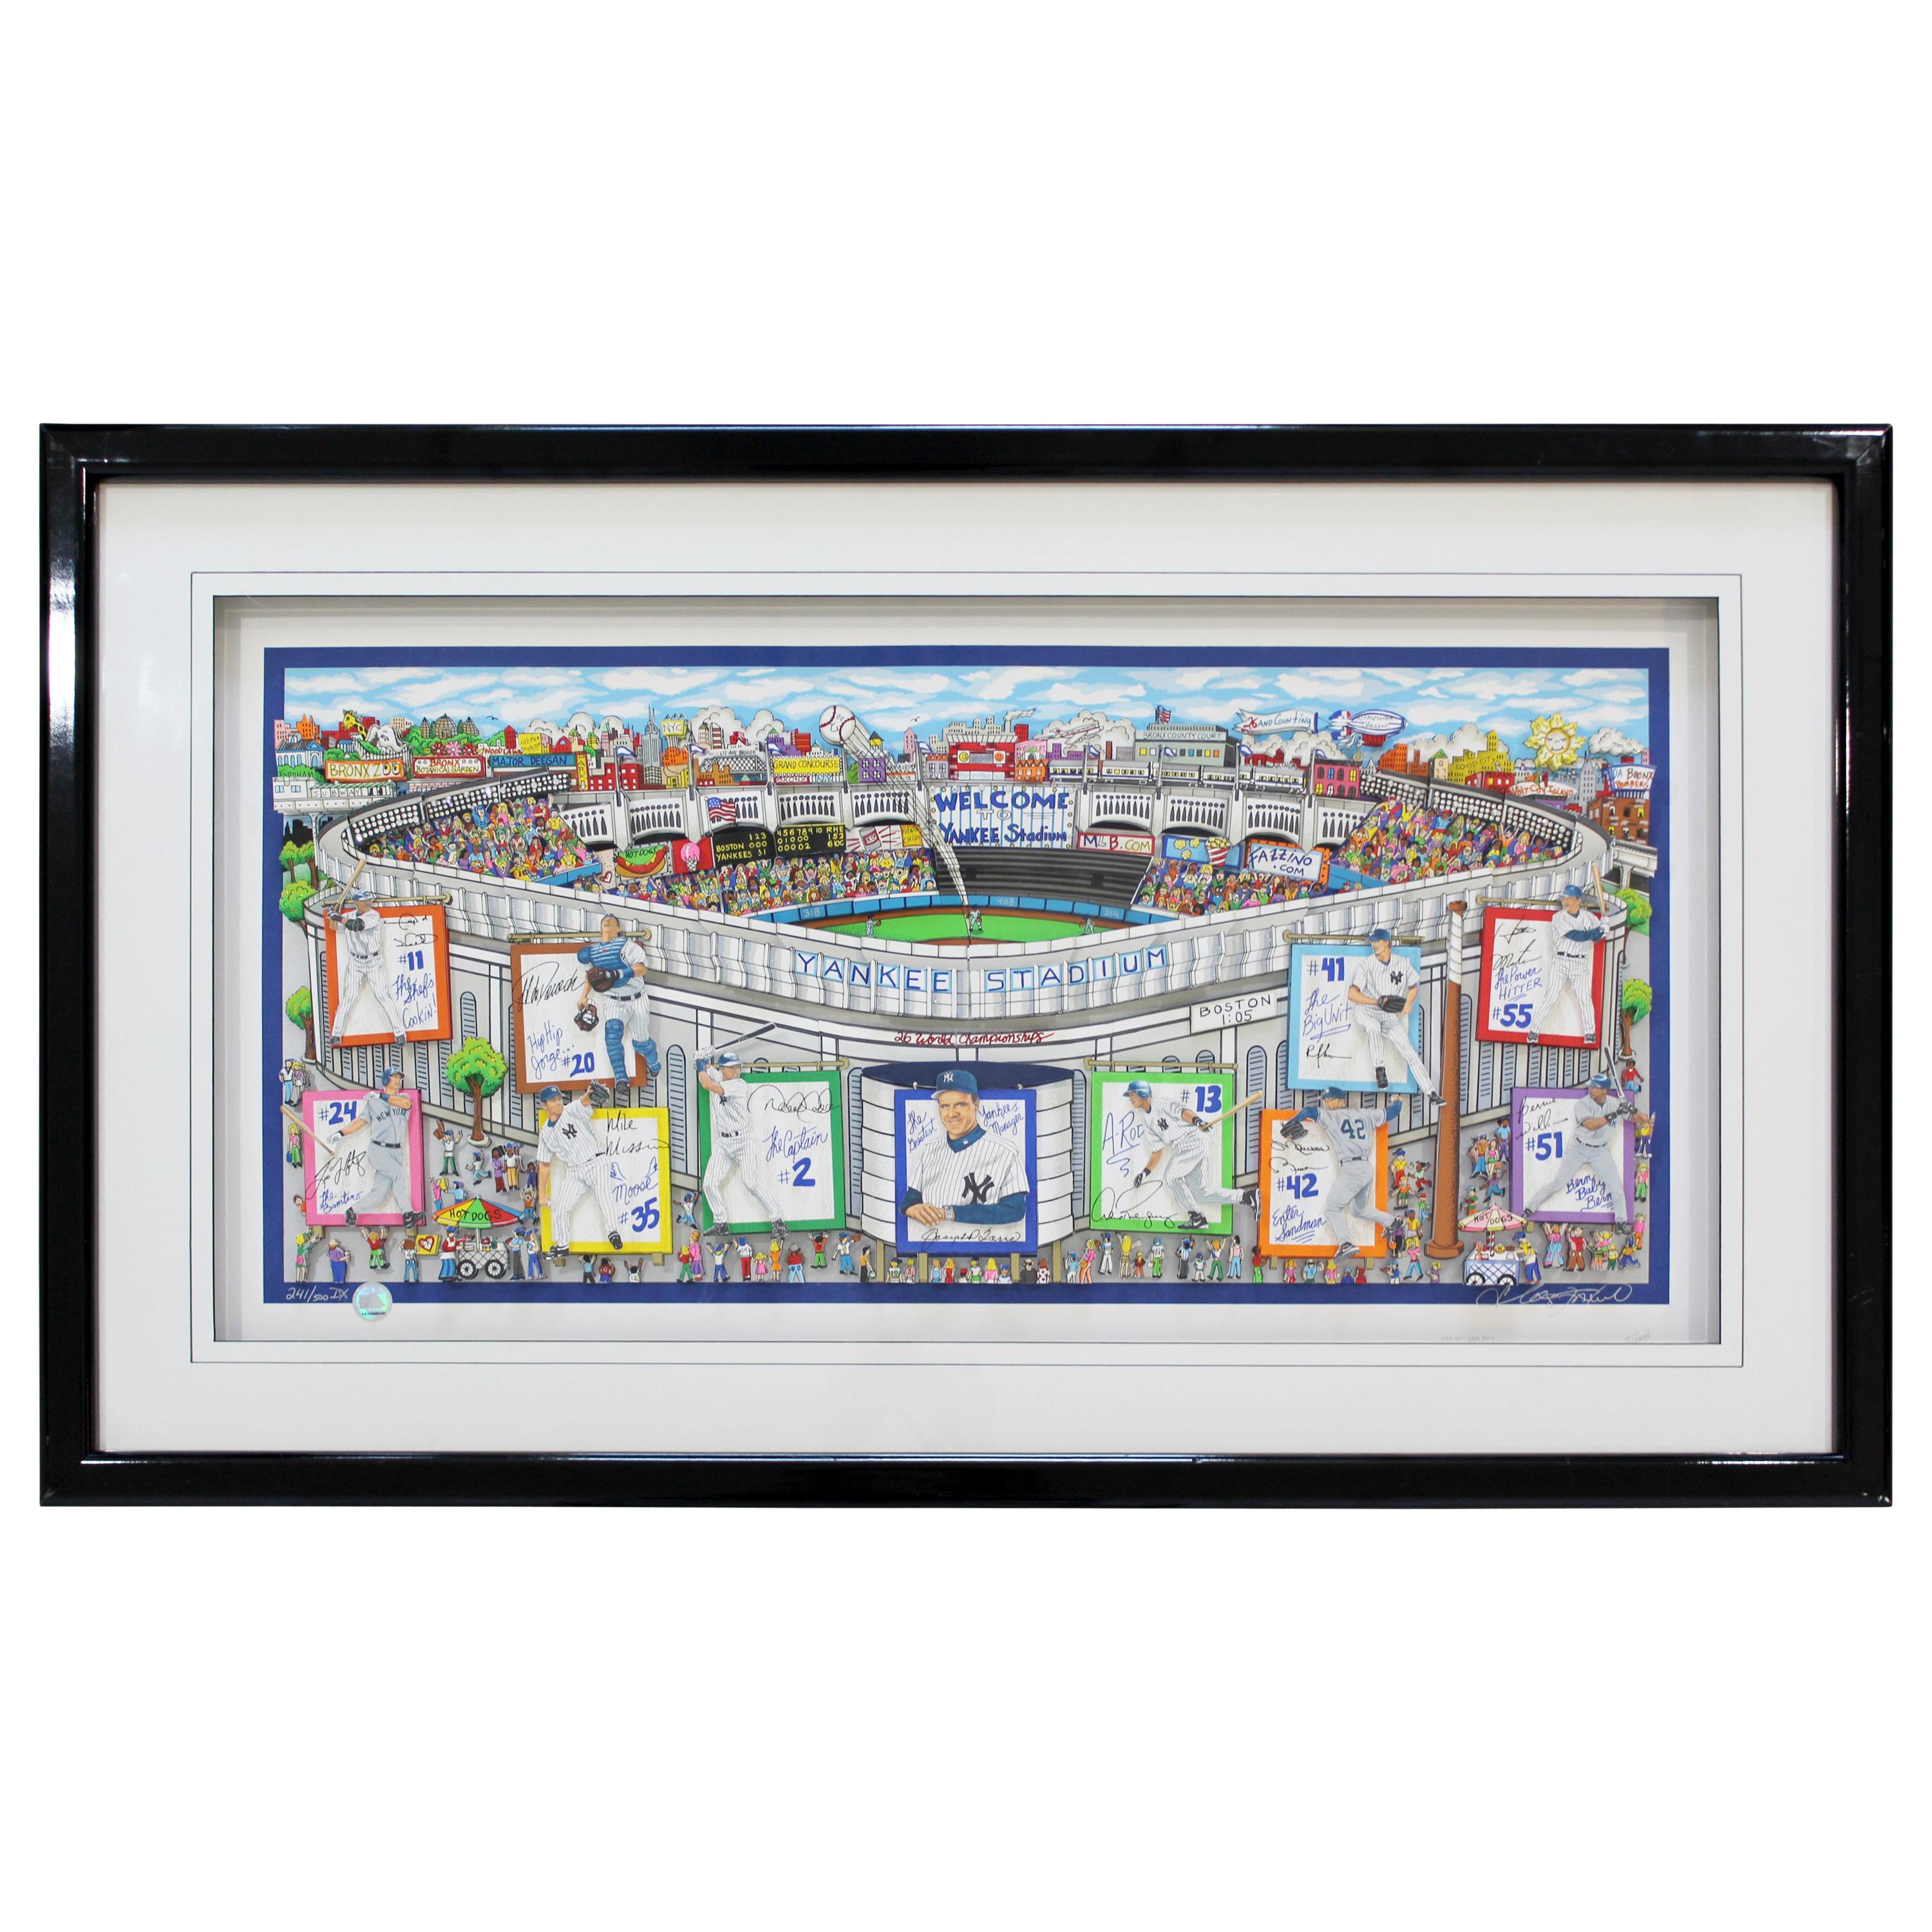 Contemporary Framed Yankee Stadium 3D Serigraph Signed Charles Fazzino 241/500